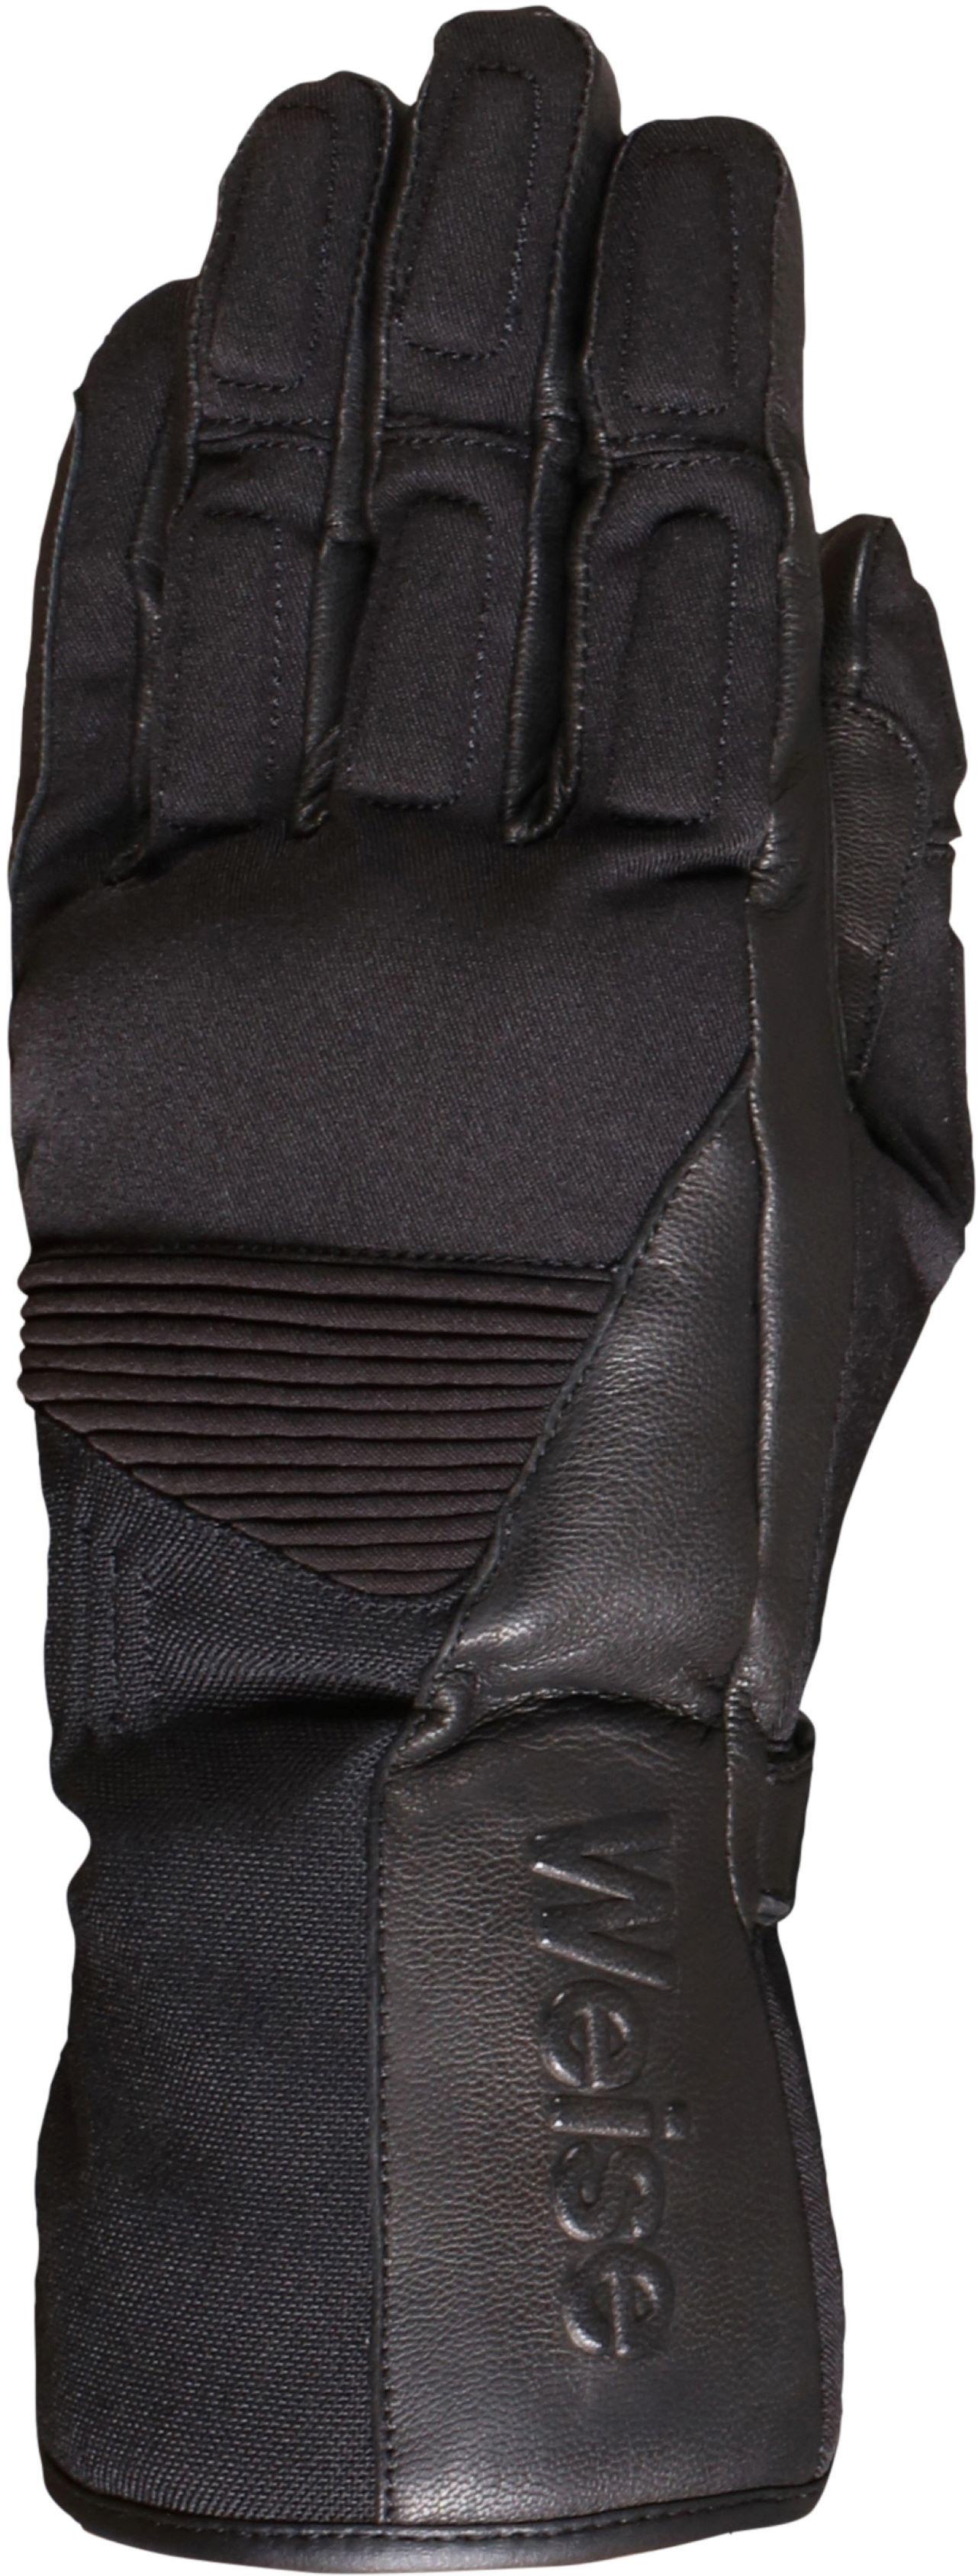 Weise Rider Motorcycle Gloves - Black, L